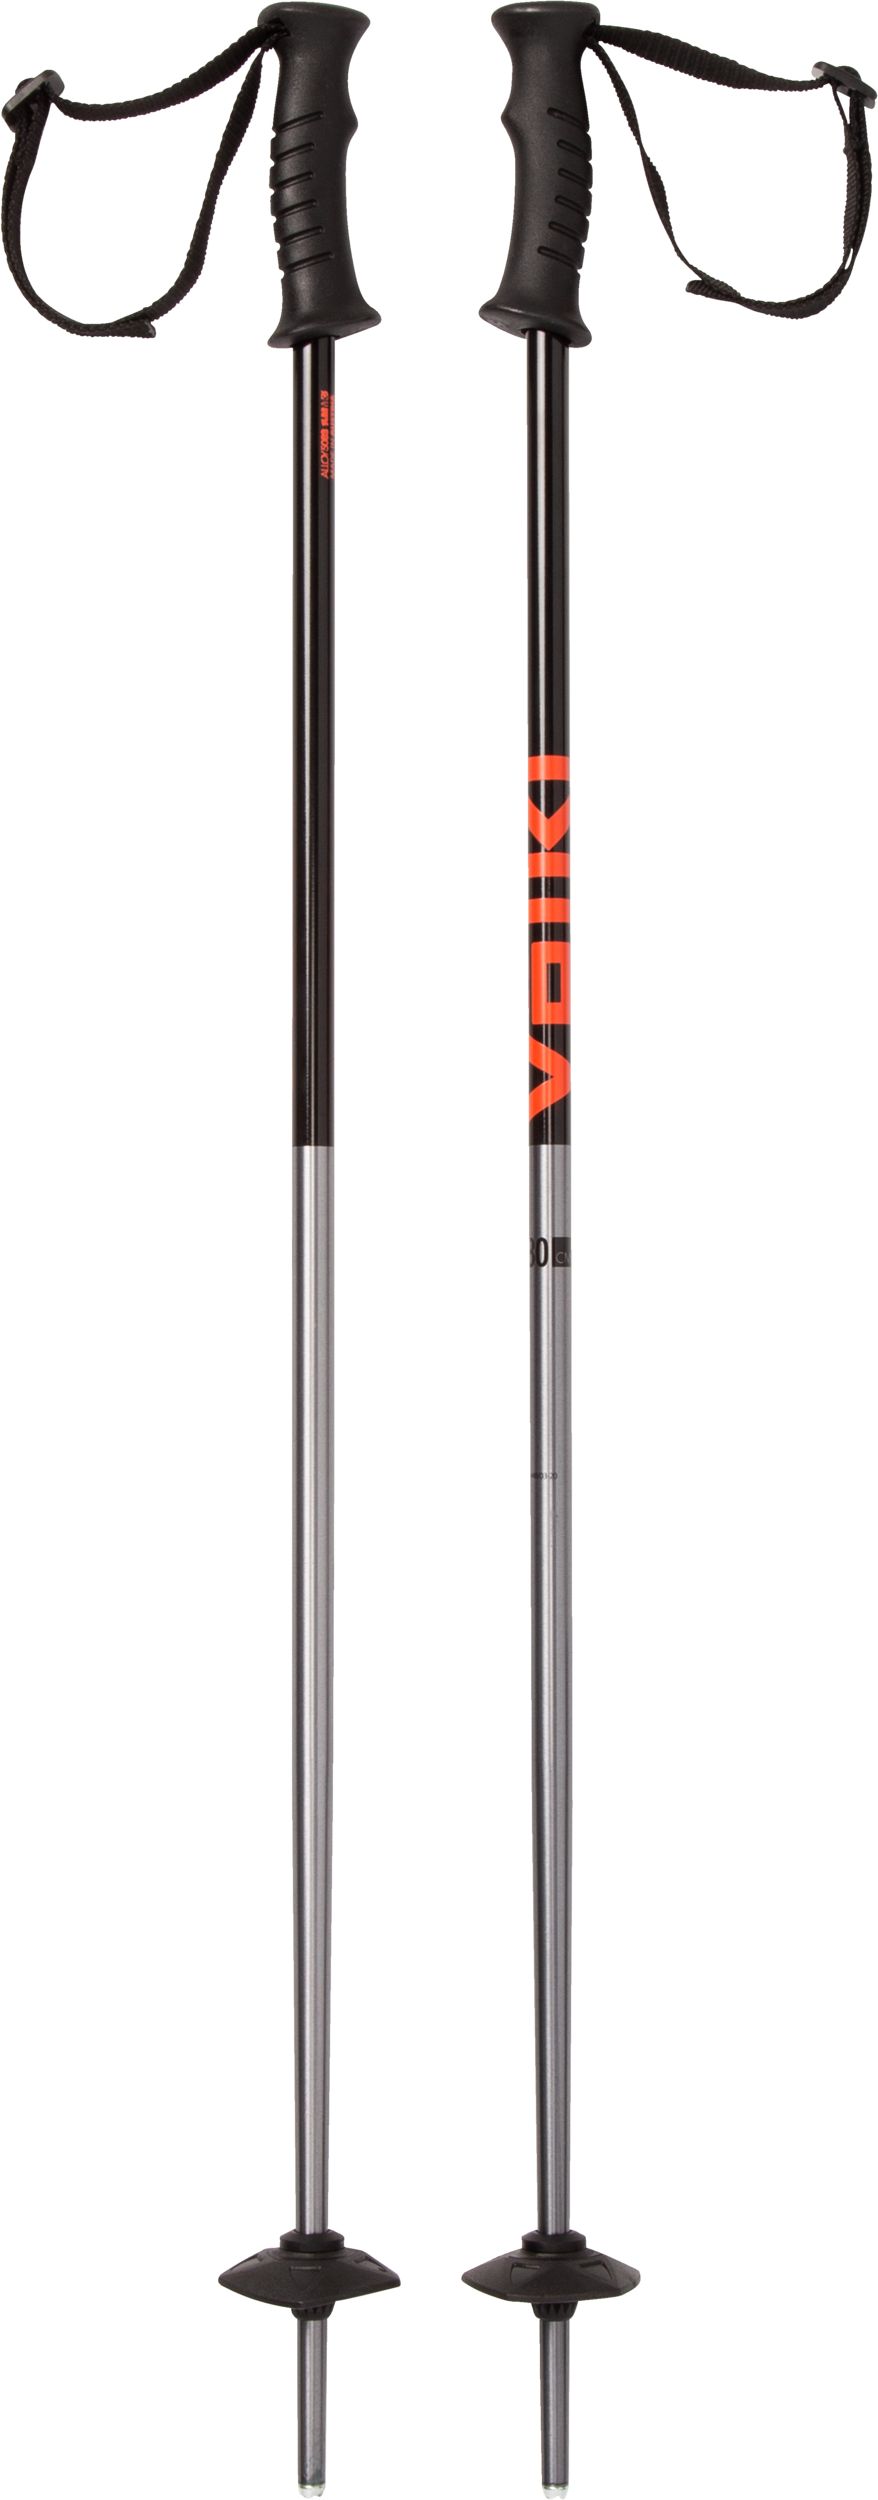 Image of Volkl Speedstick Junior Ski Poles 2021